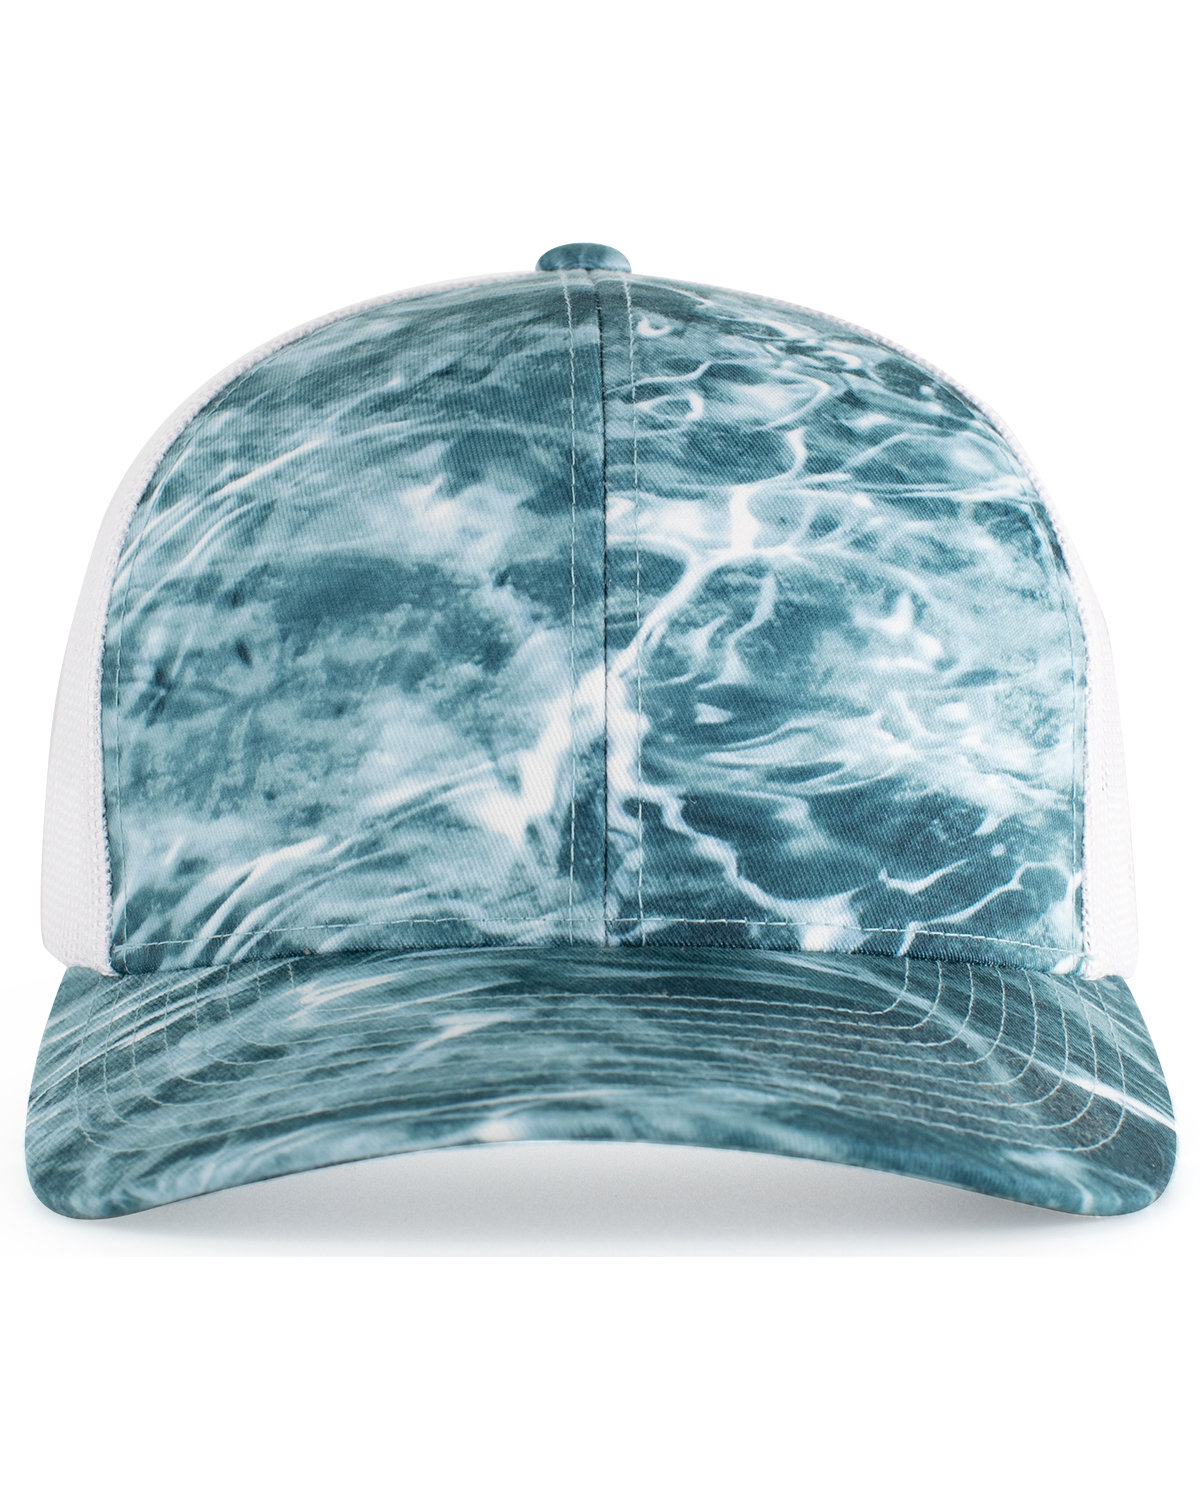 Pacific Headwear Snapback Trucker Hat spindrift/ white 